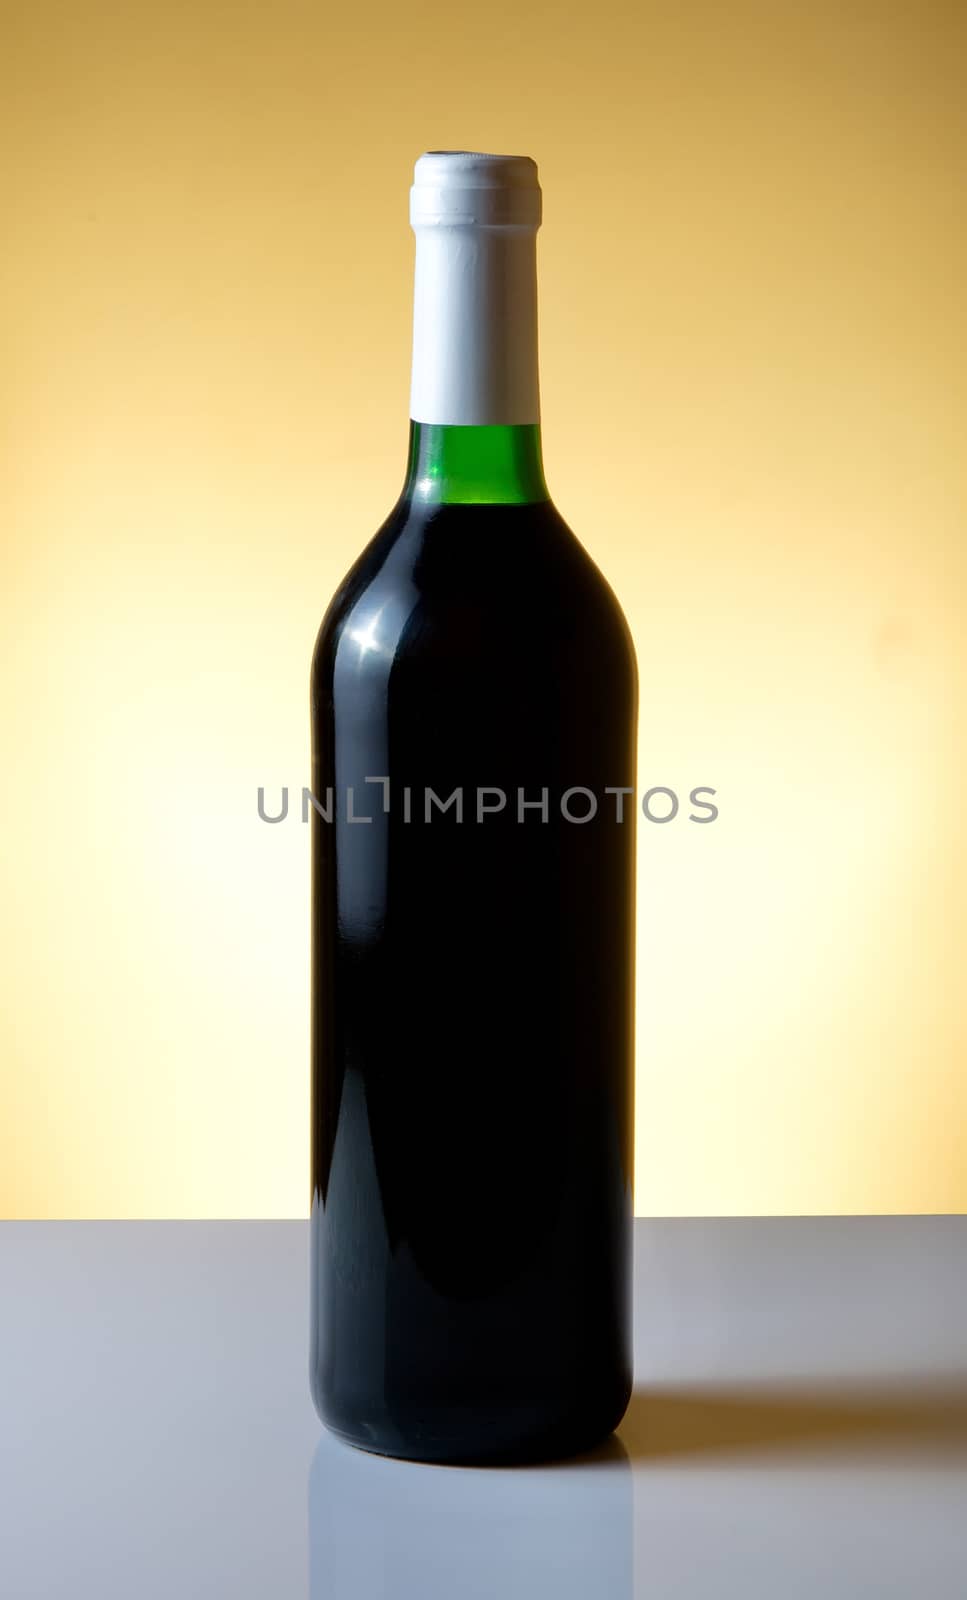 Vine bottle on orange background